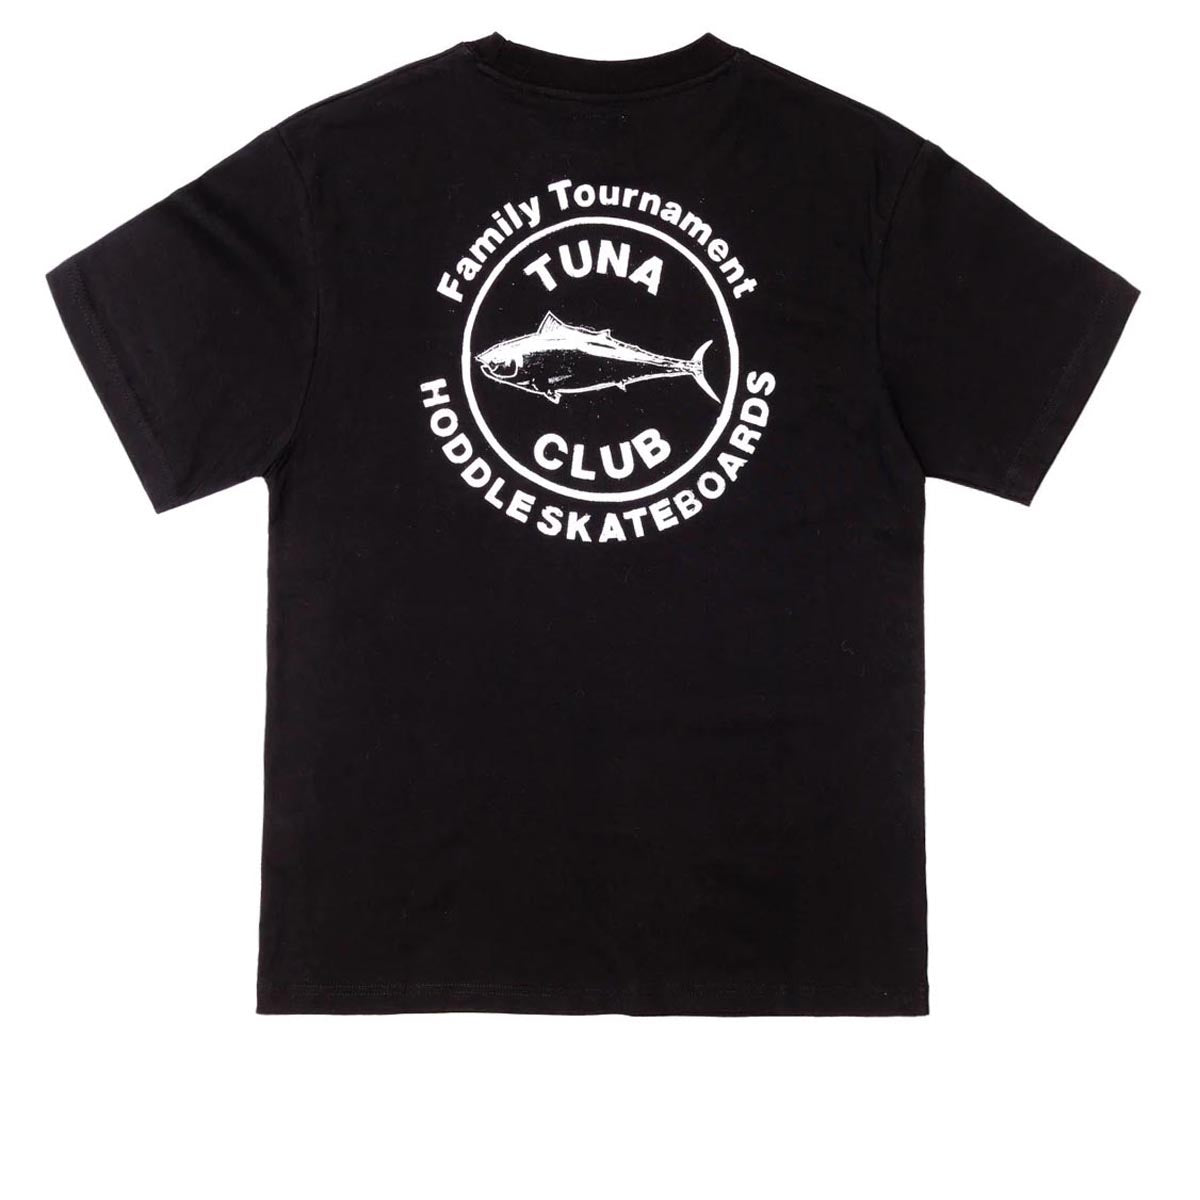 Hoddle Tuna Club T-Shirt - Black image 1